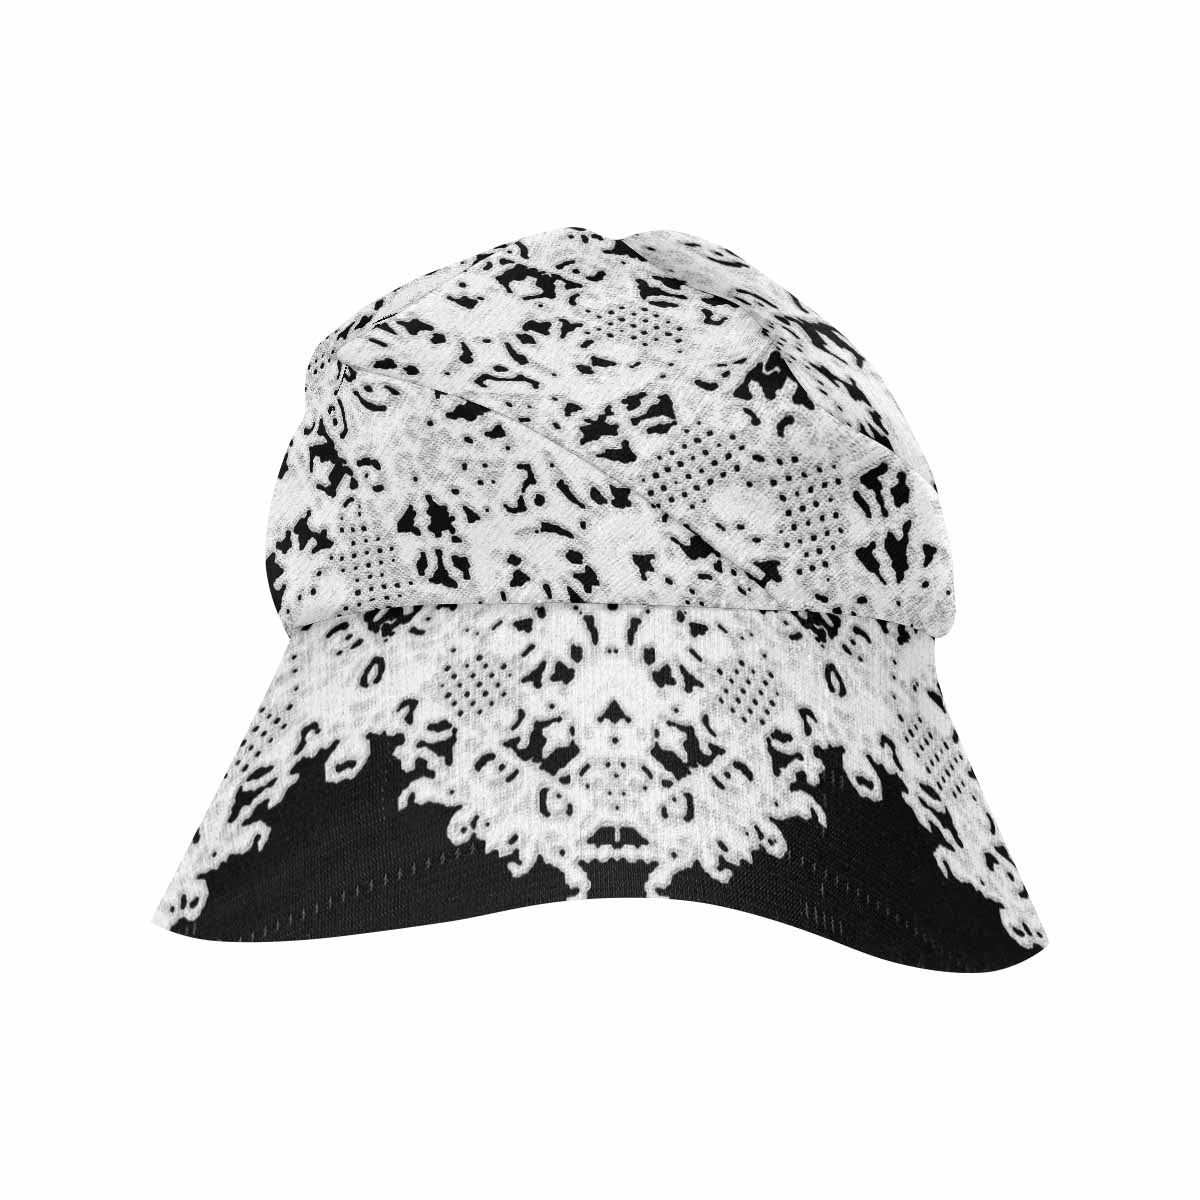 Victorian lace print, wide brim sunvisor Hat, outdoors hat, design 50